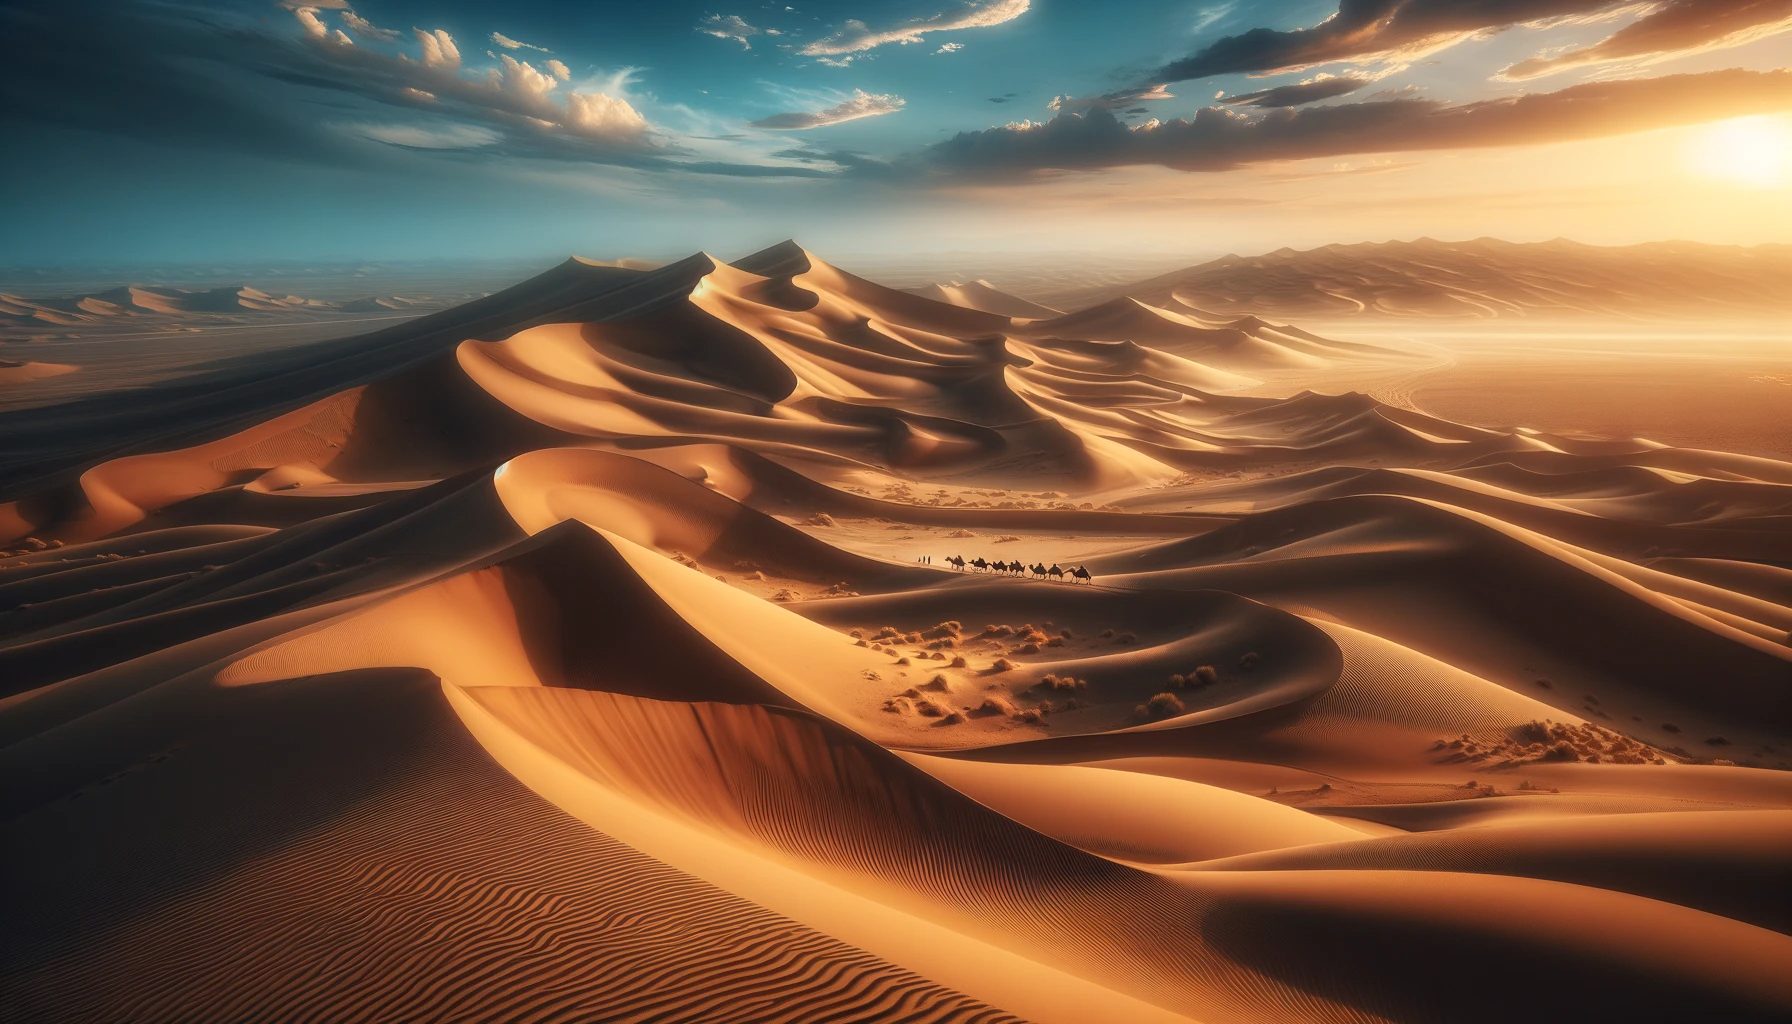 Sunset over serene desert dunes with camel caravan.